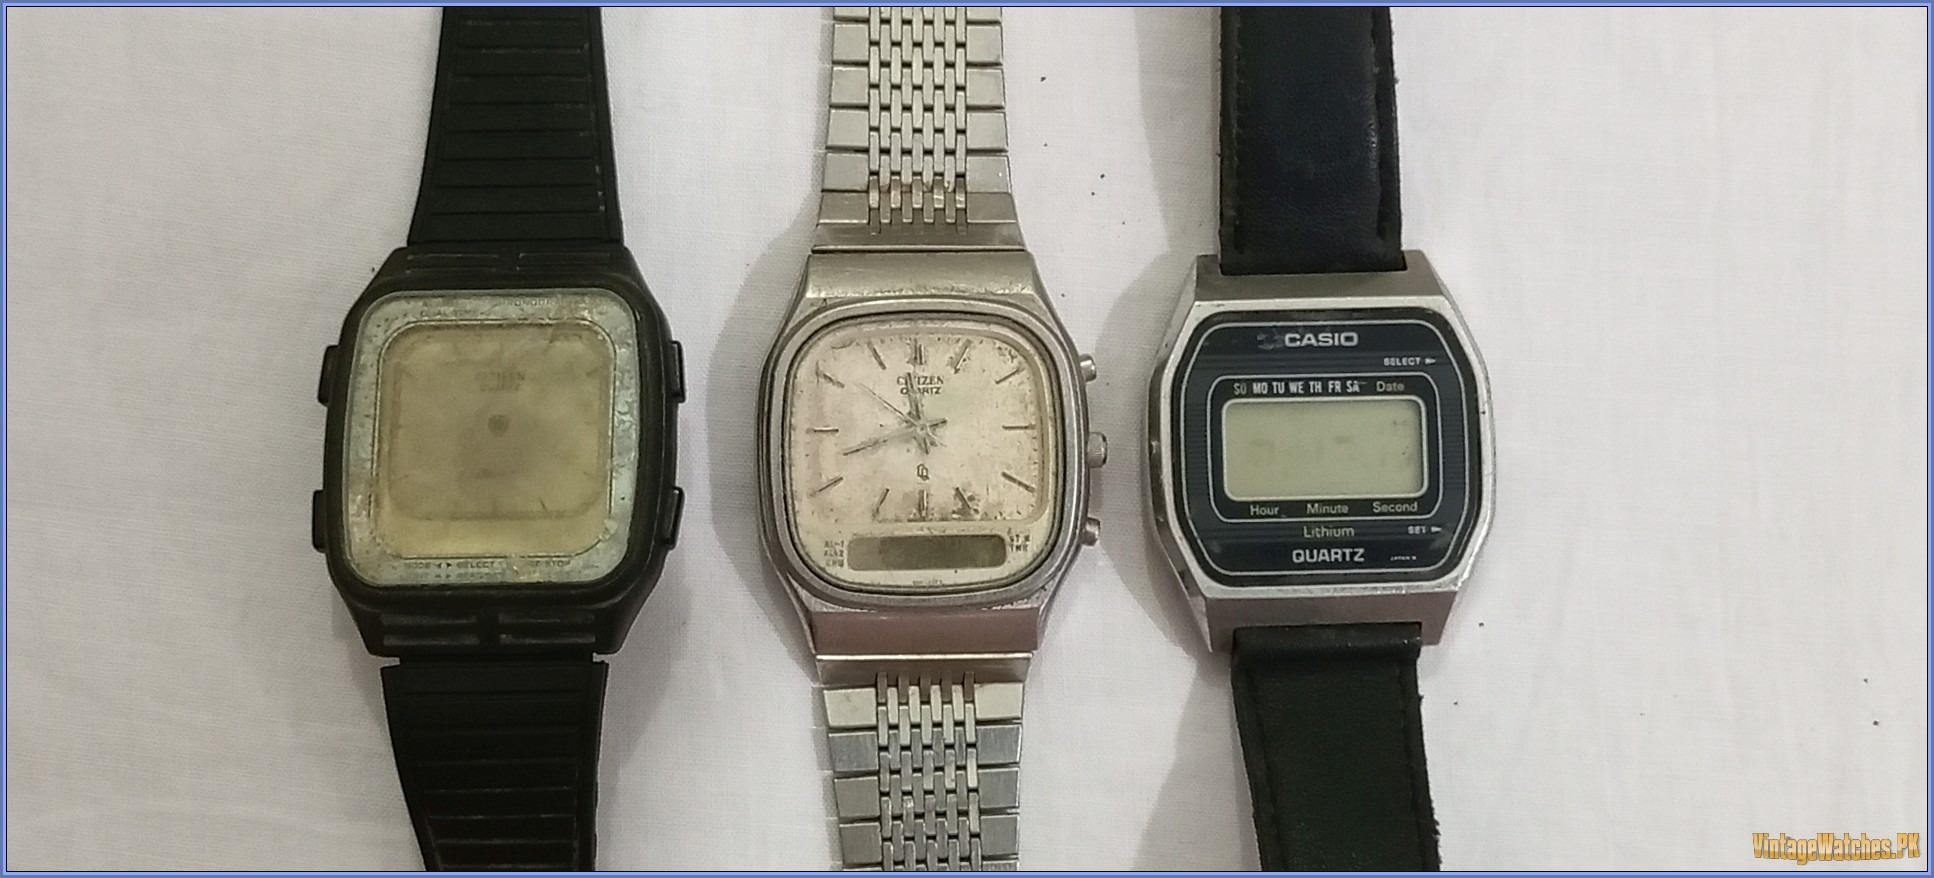 Lot 6 Original Vintage Old Classic Ana Digital Watches Casio Citizen 9570, 9560, 8950 - PK00017-IMG_20221009_191504_144 - VintageWatches.PK